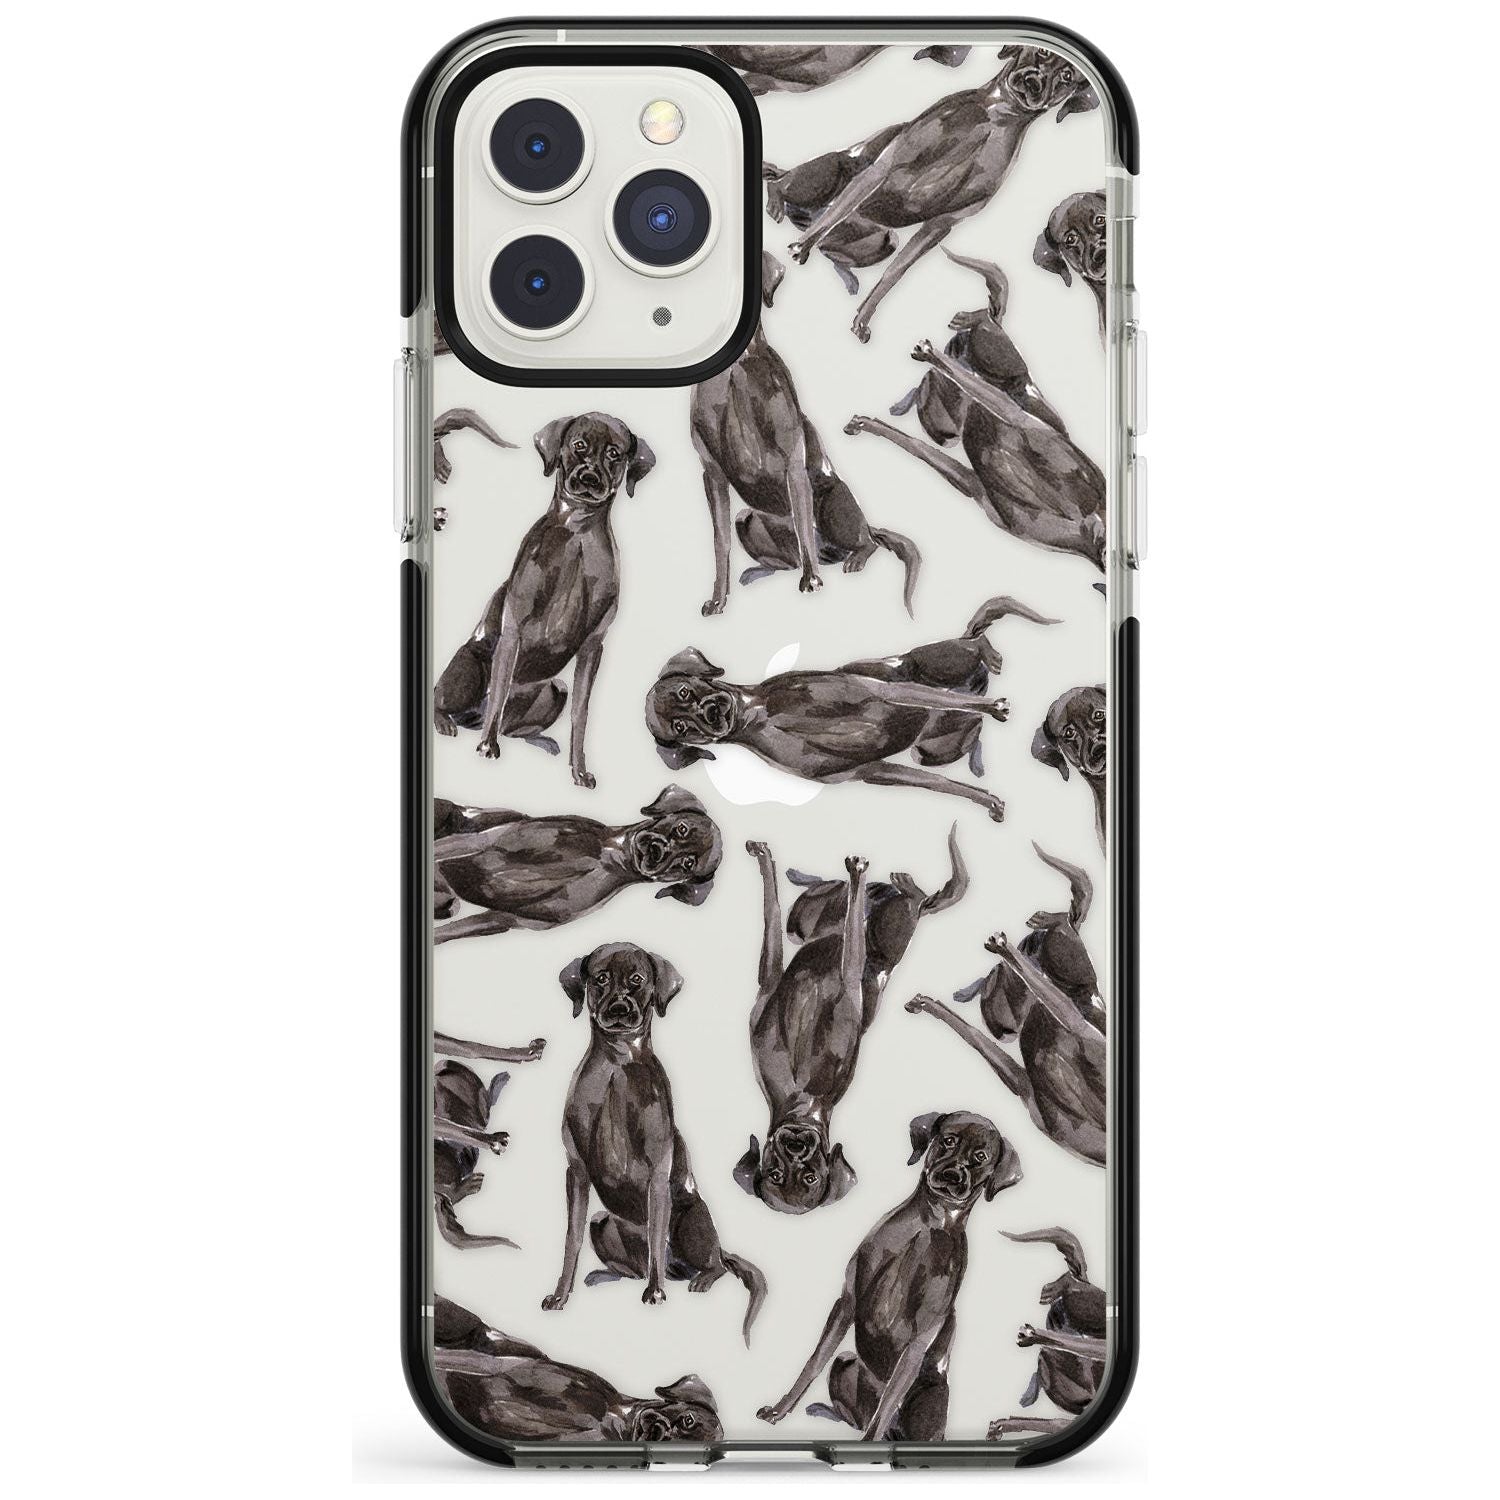 Black Labrador Watercolour Dog Pattern Black Impact Phone Case for iPhone 11 Pro Max